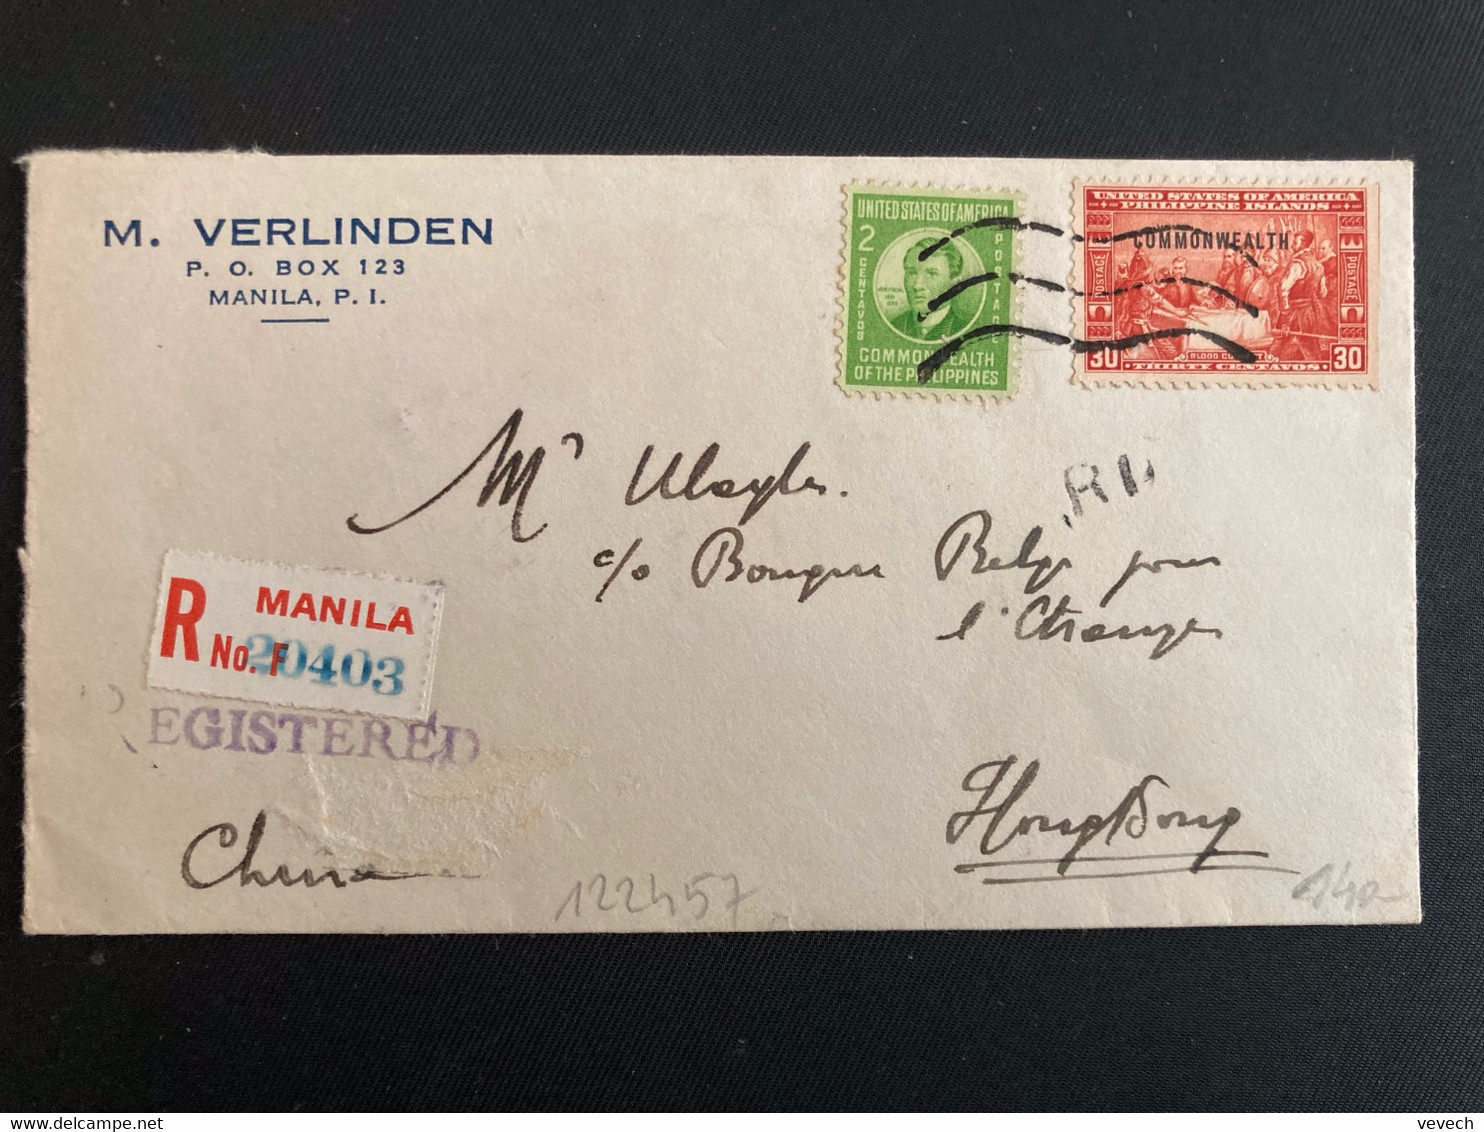 LR Pour HONG KONG CHINE TP 2c + TP 30 Surch. COMMONWEALTH OBL. + JUL 15 1941 REGISTERED + VERLINDEN MANILA - Filippine